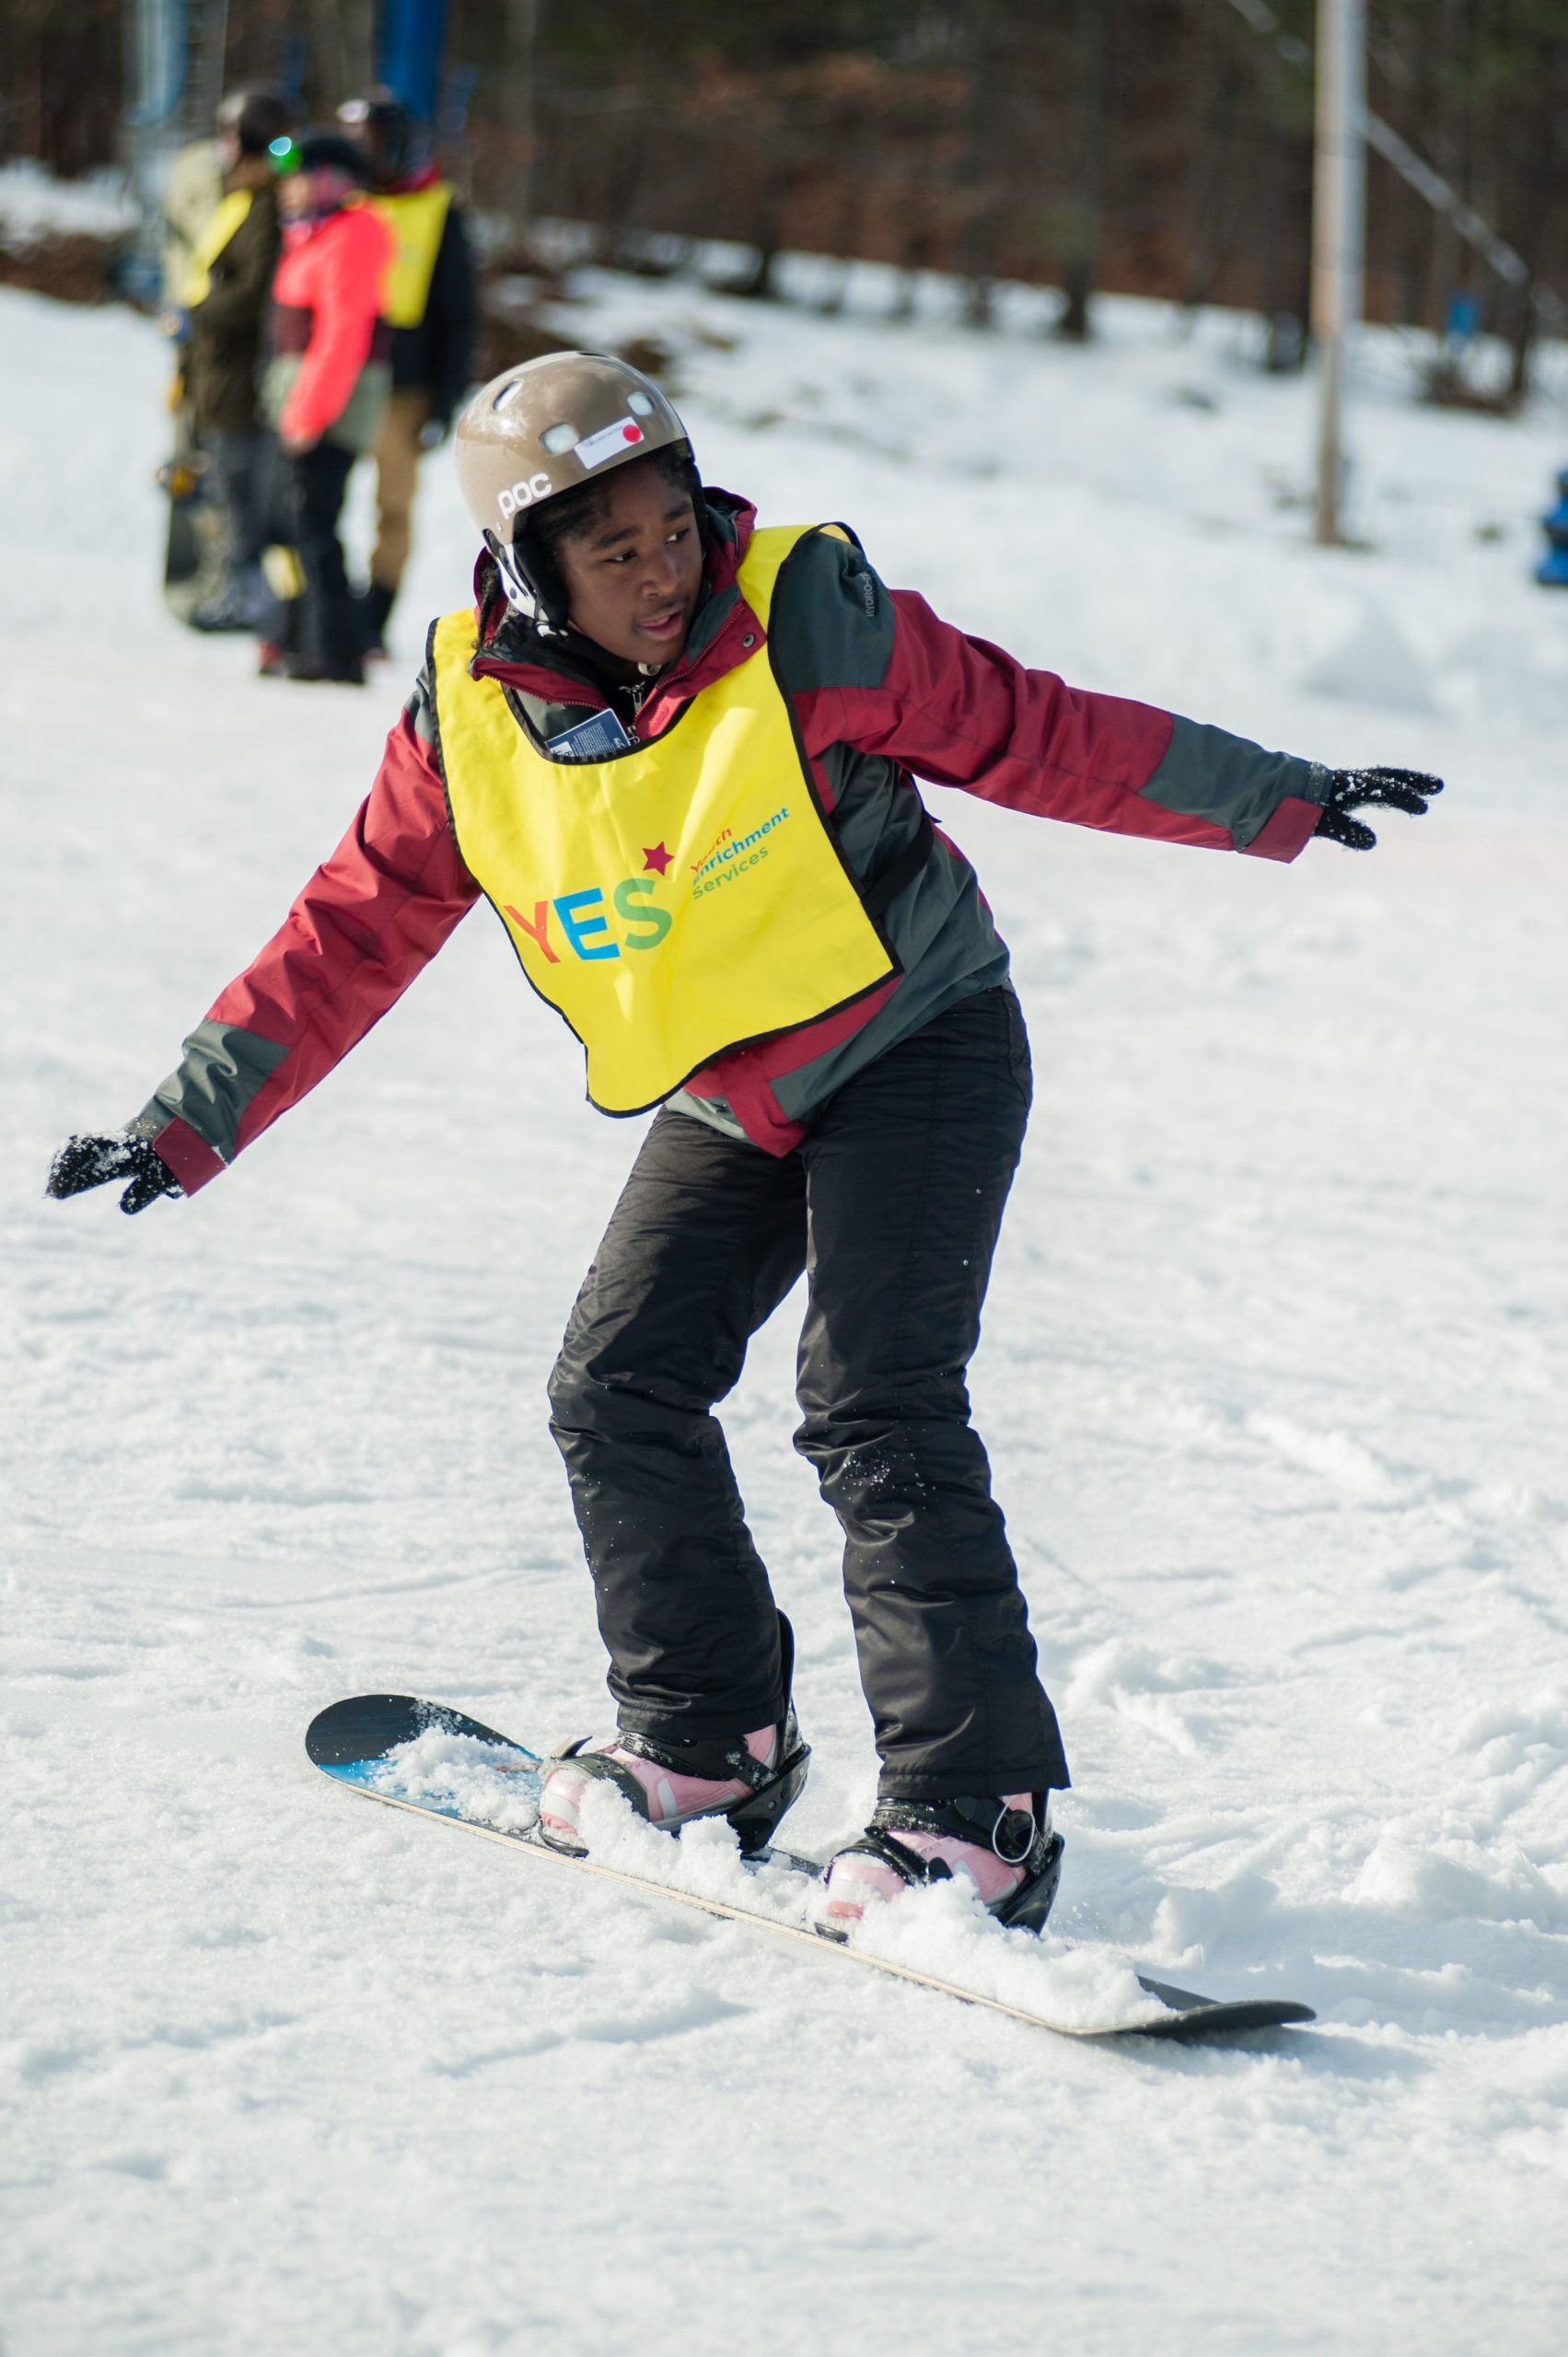 Partners in Progress Snowboarding Outreach programs